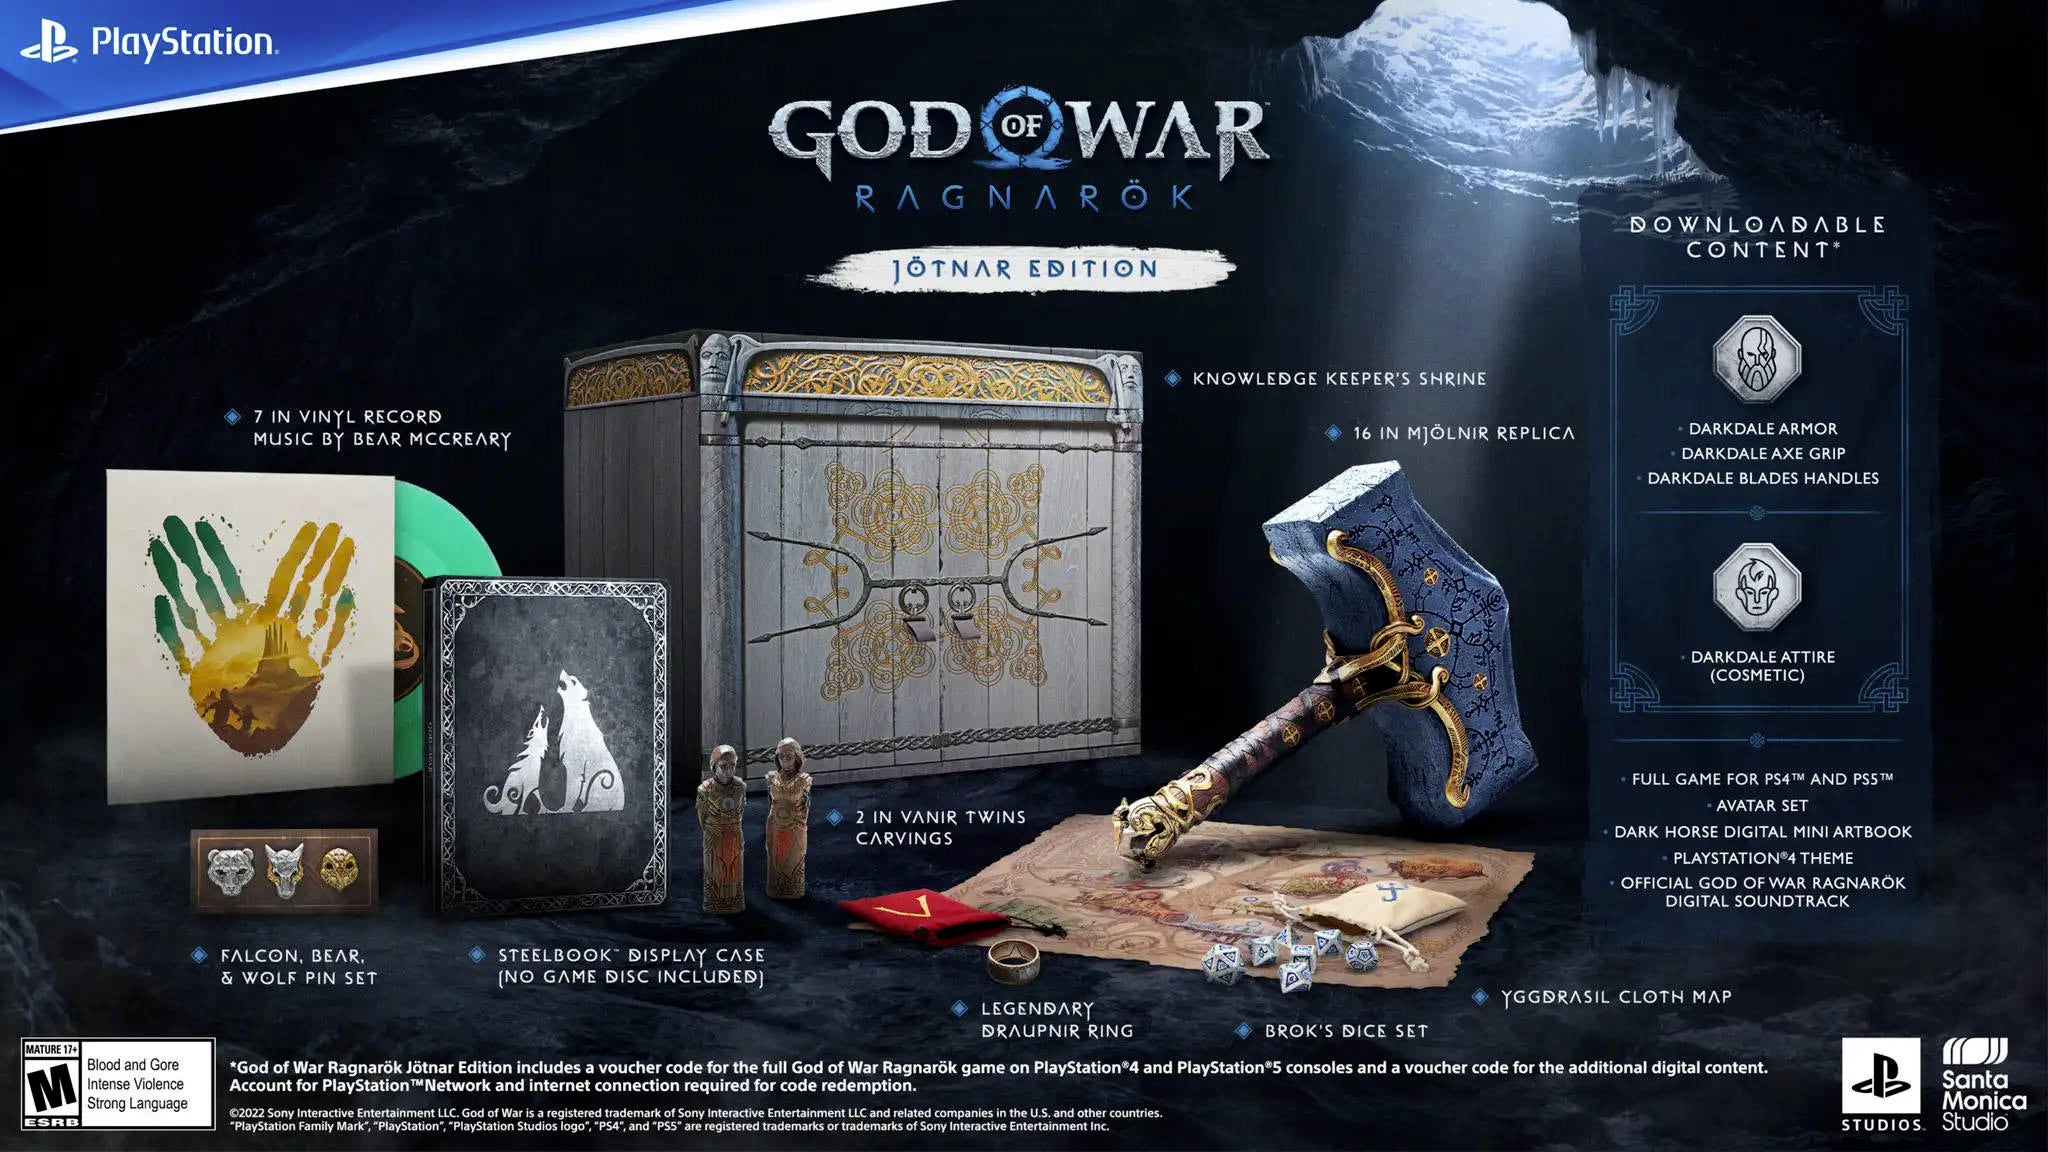 PS5 console and 'God of War Ragnarök' bundle is $50 off